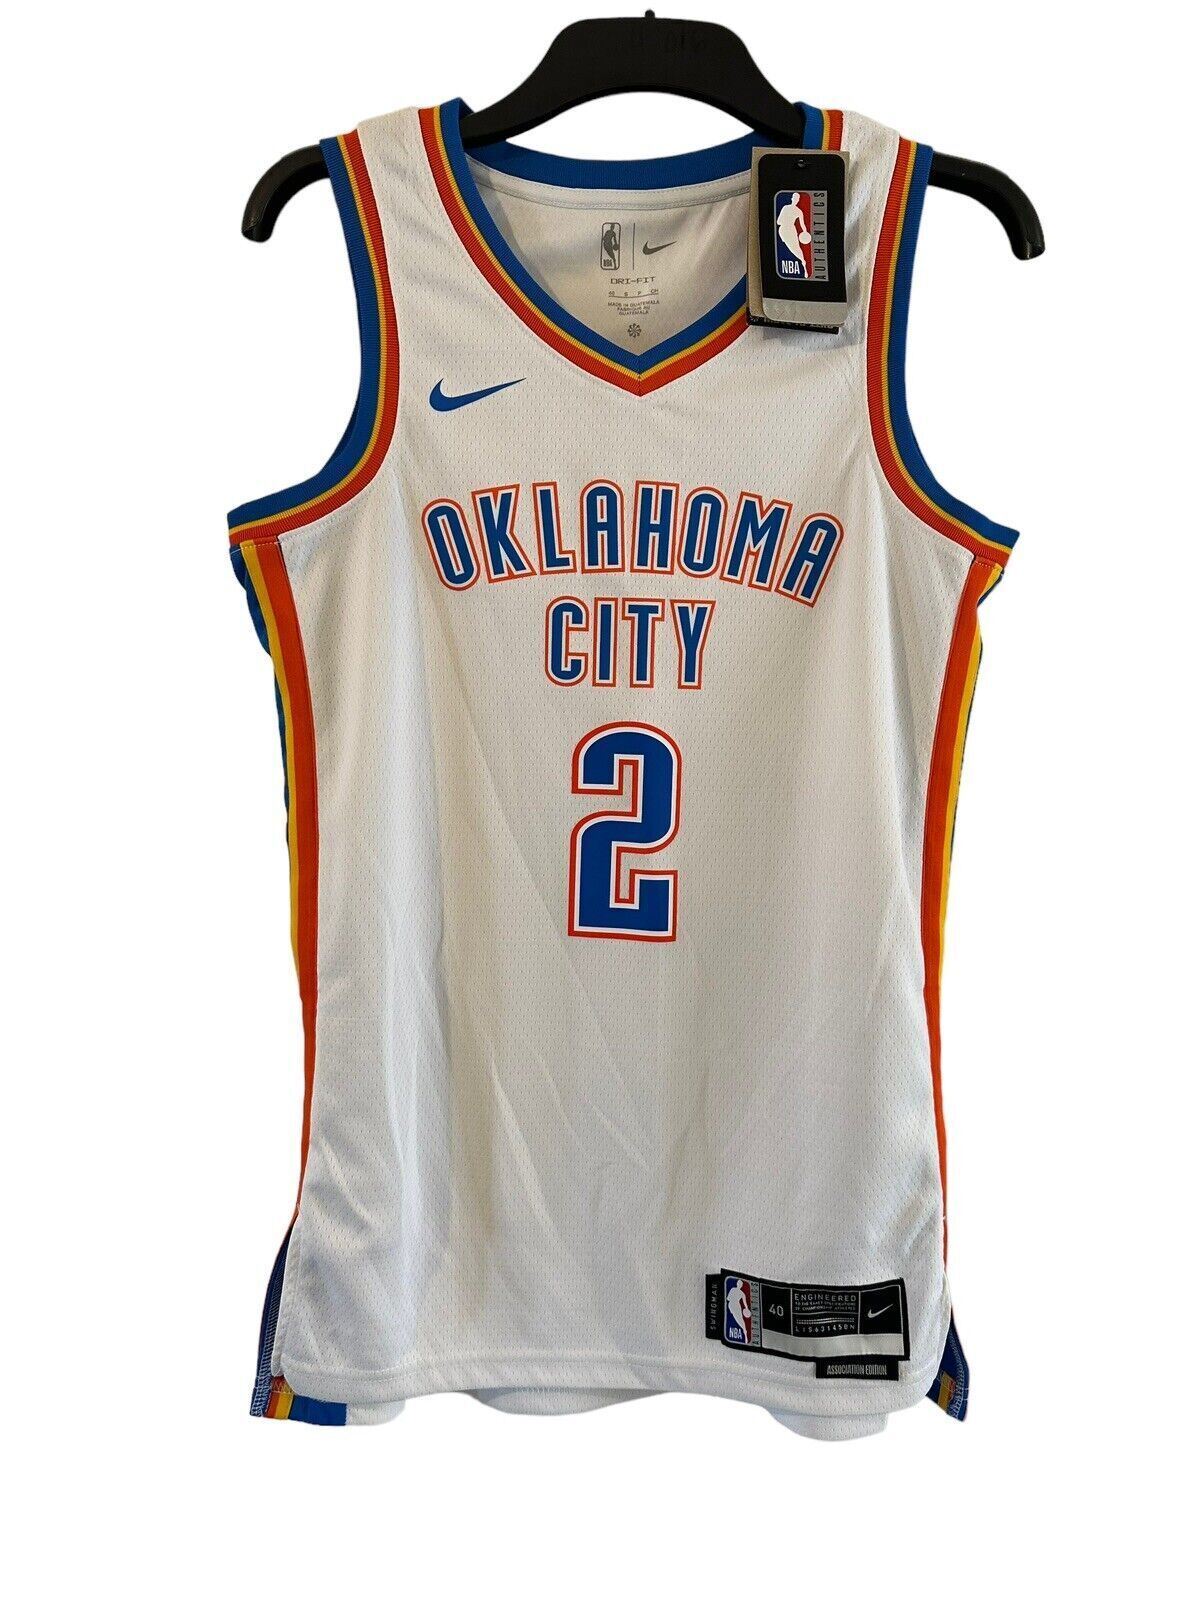 Nike NBA Oklahoma City Association Edition Jersey SHAI 2 Mens Small *DF*